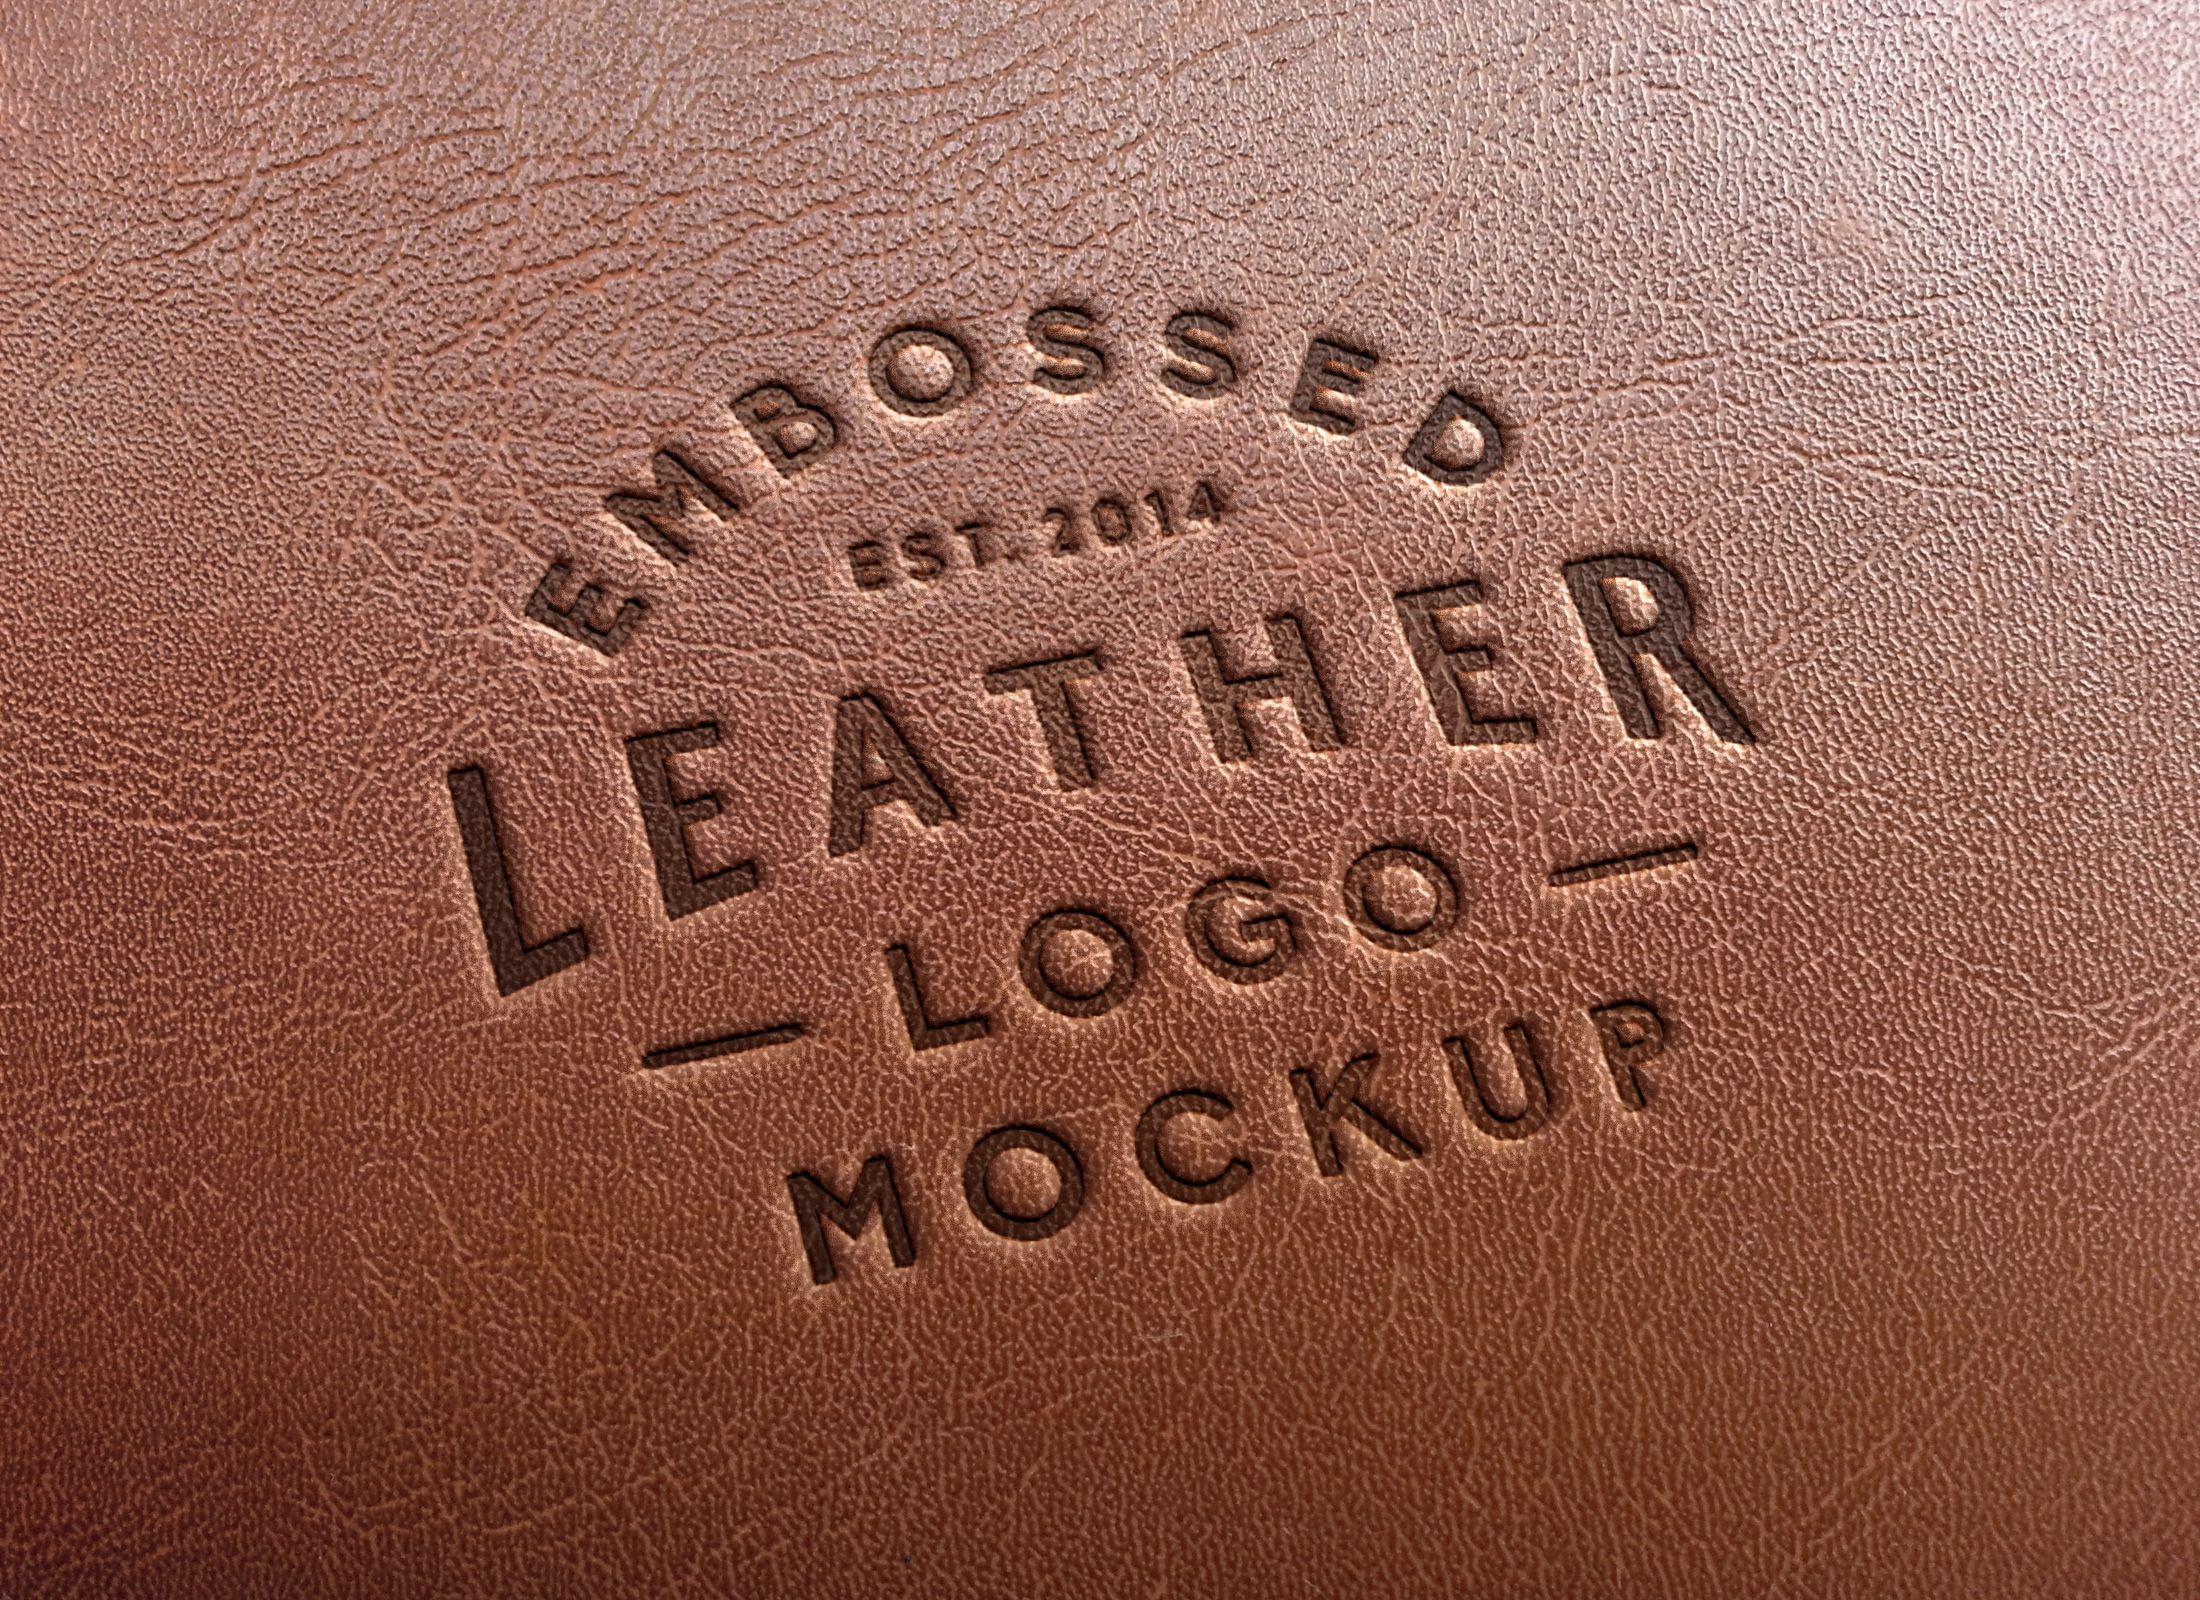 Leather Logo - Leather Stamping Logo MockUp #2 | GraphicBurger